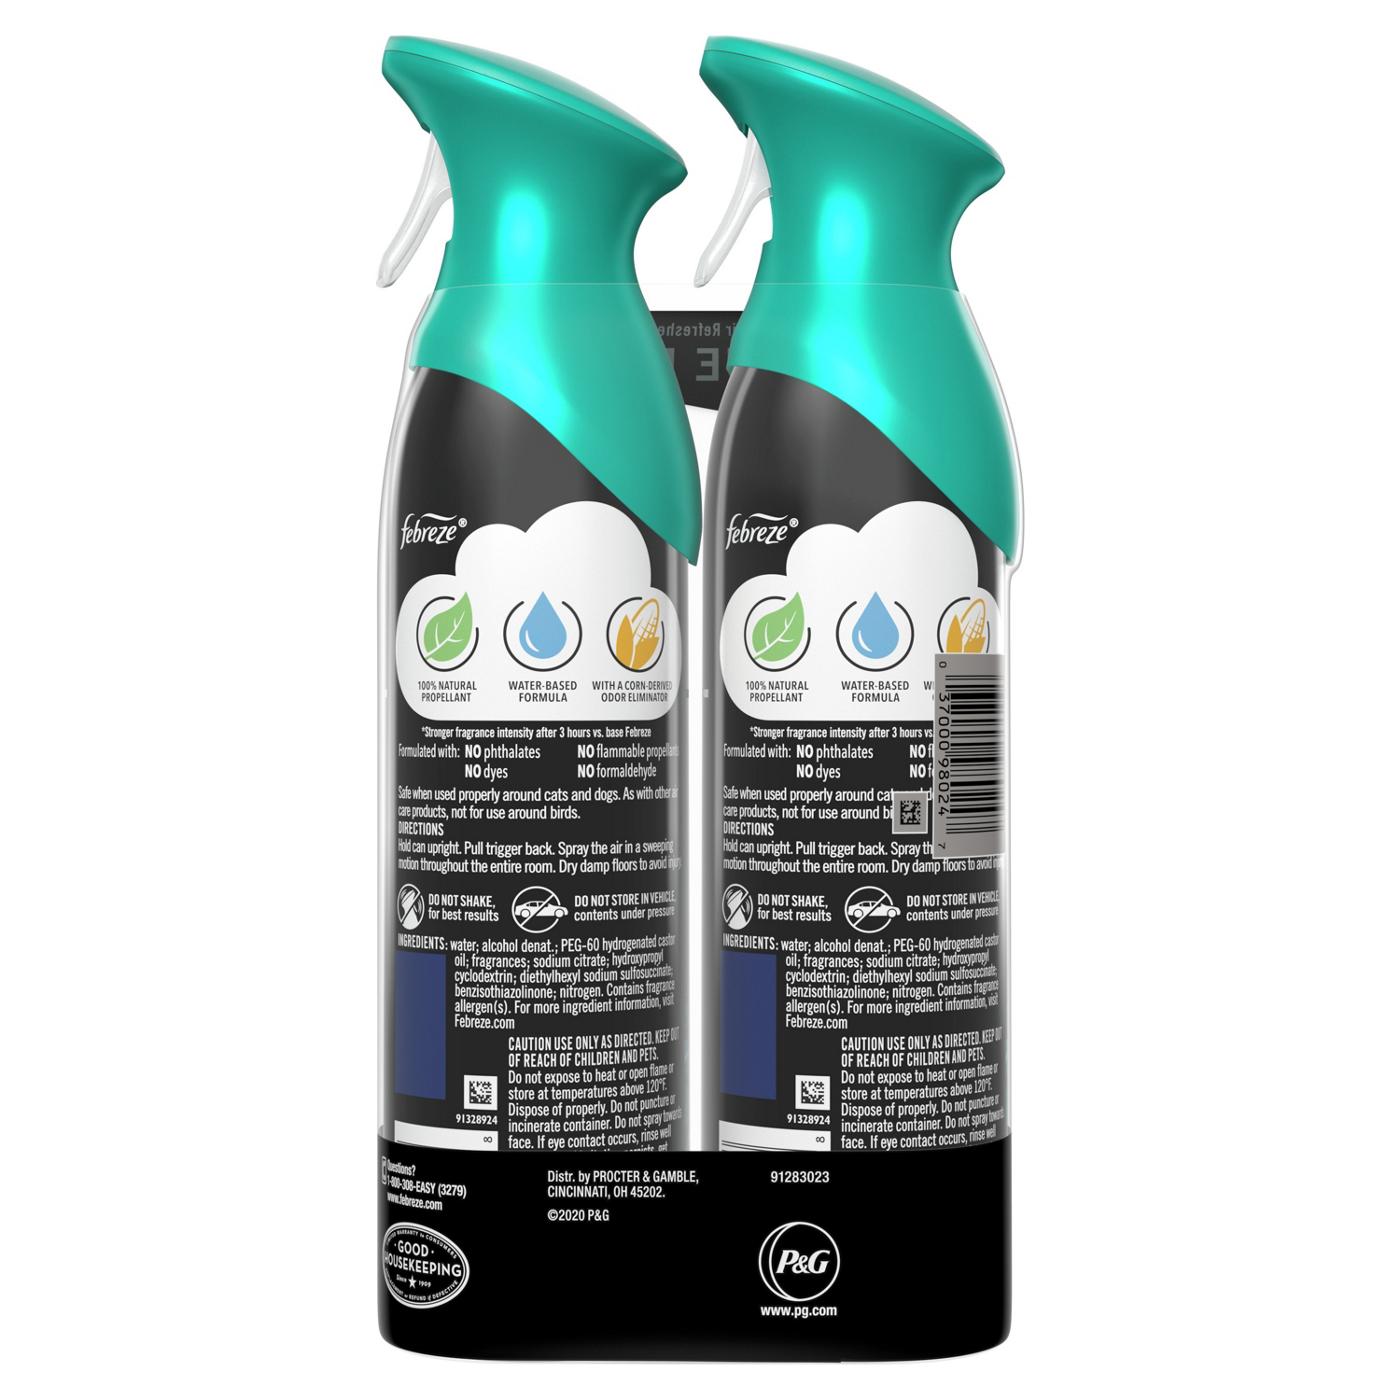 Febreze Air Gain Original Scent Odor-Eliminating Spray - Shop Air  Fresheners at H-E-B